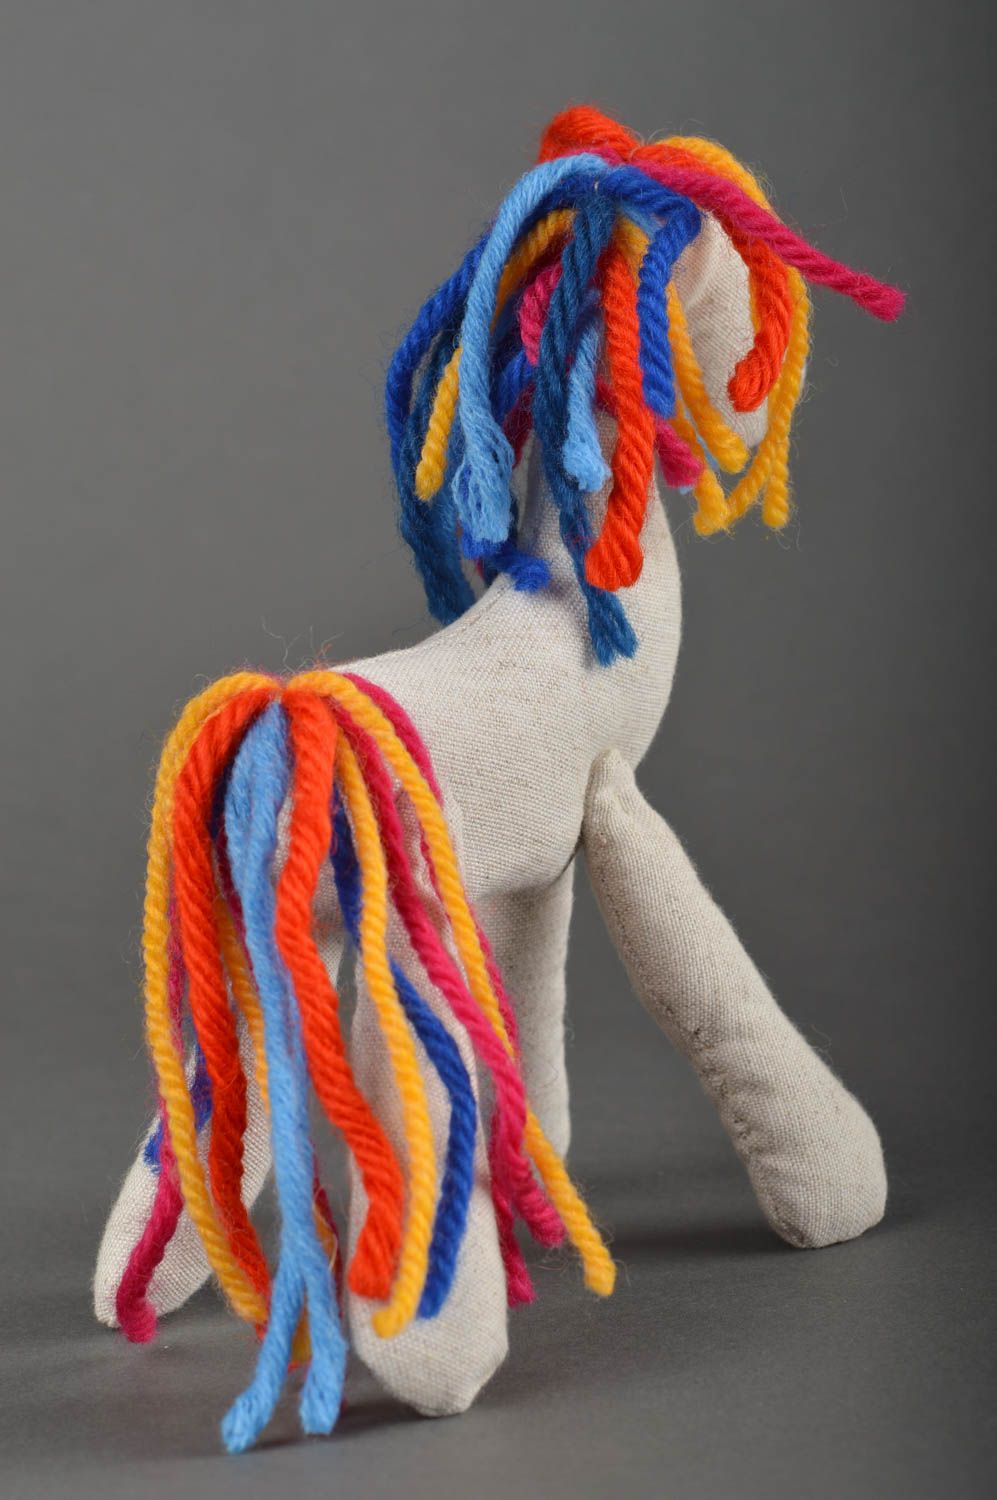 Handmade stuffed toy horse toy soft cute toy for children nursery decor ideas photo 3